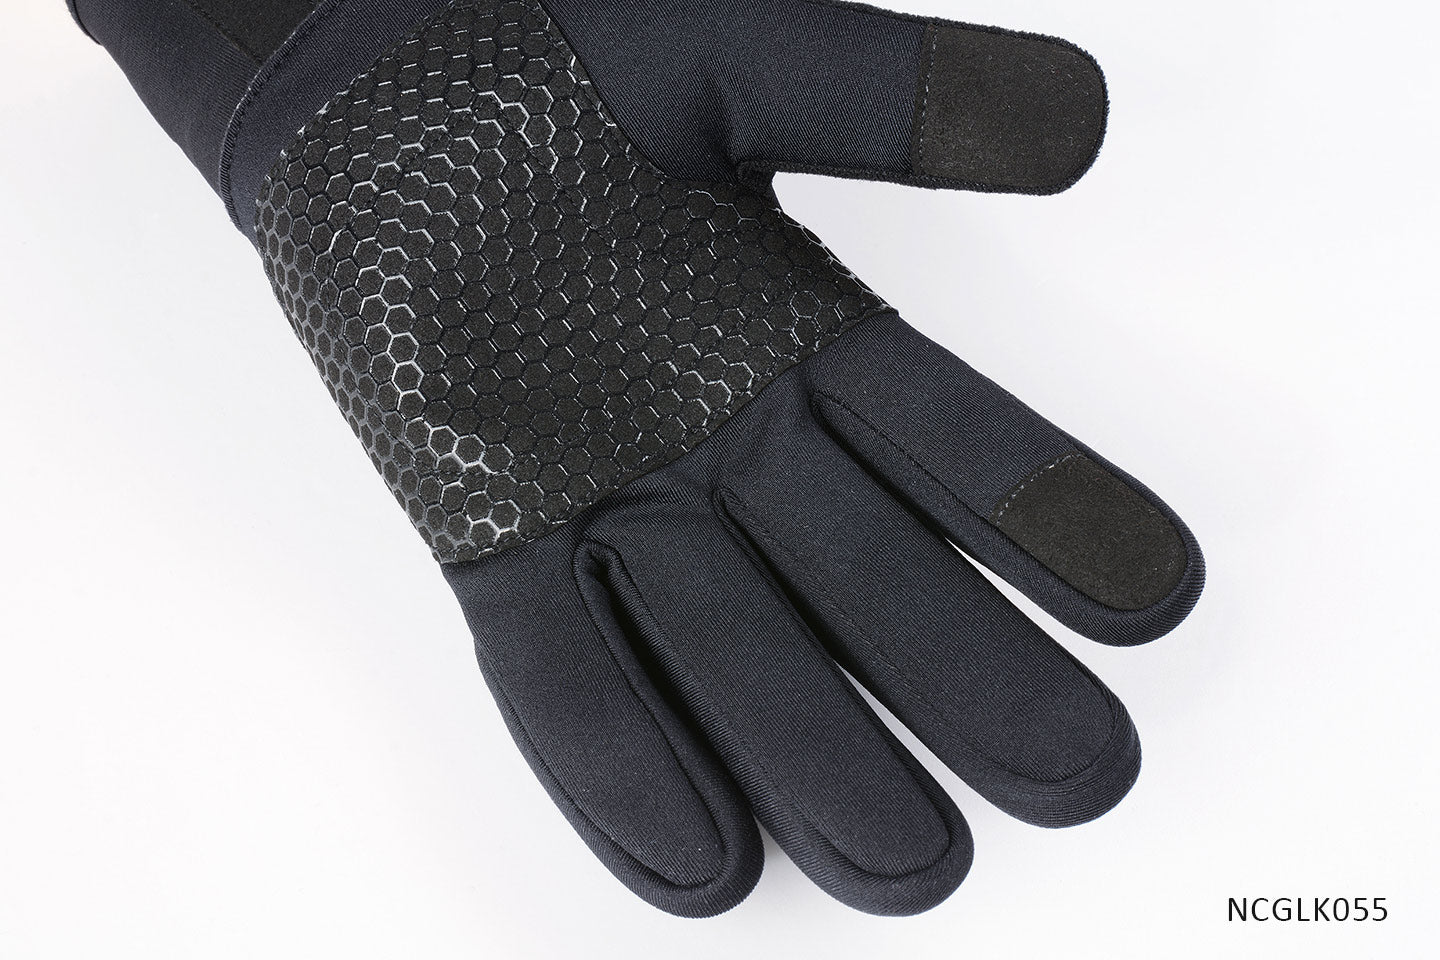 Fahrrad-WINTER-Handschuhe NCGLK055